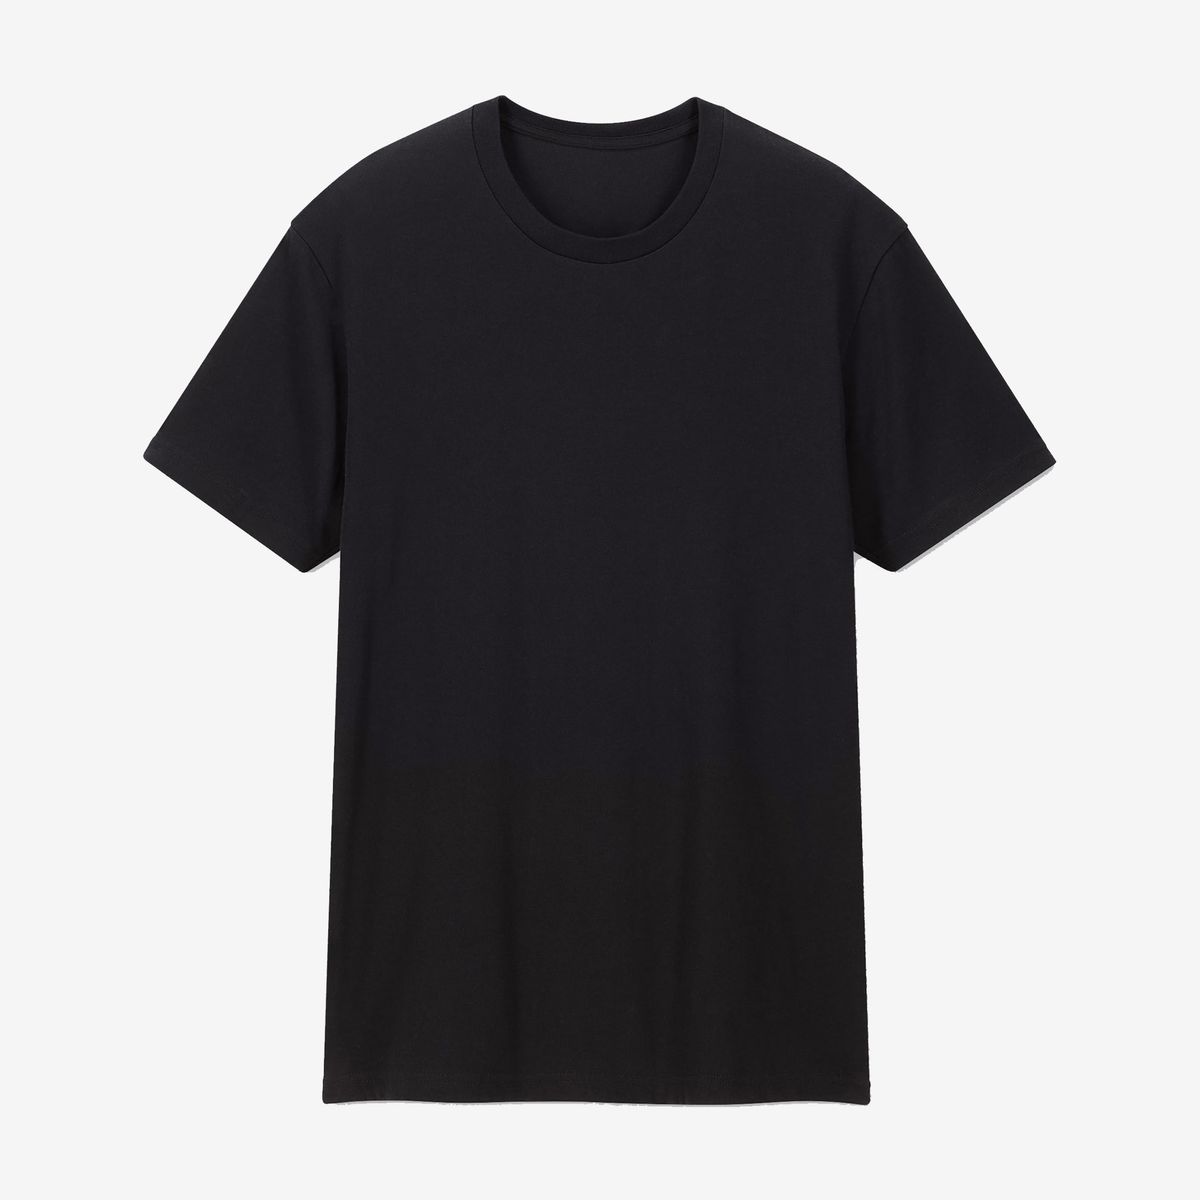 plain black dri fit t shirt